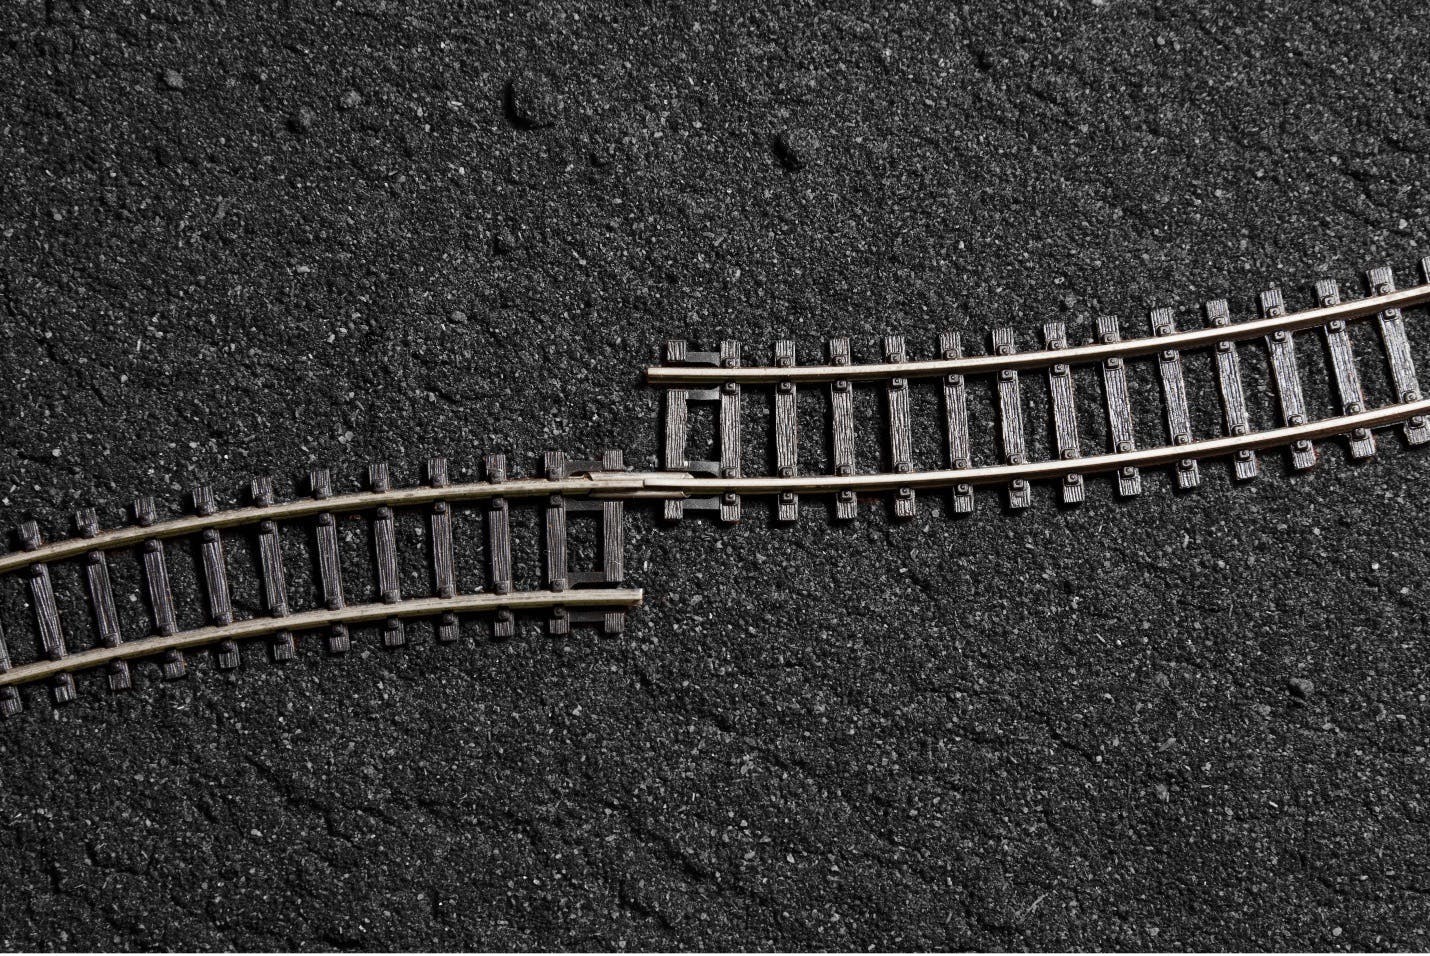 Trains tracks not aligning.